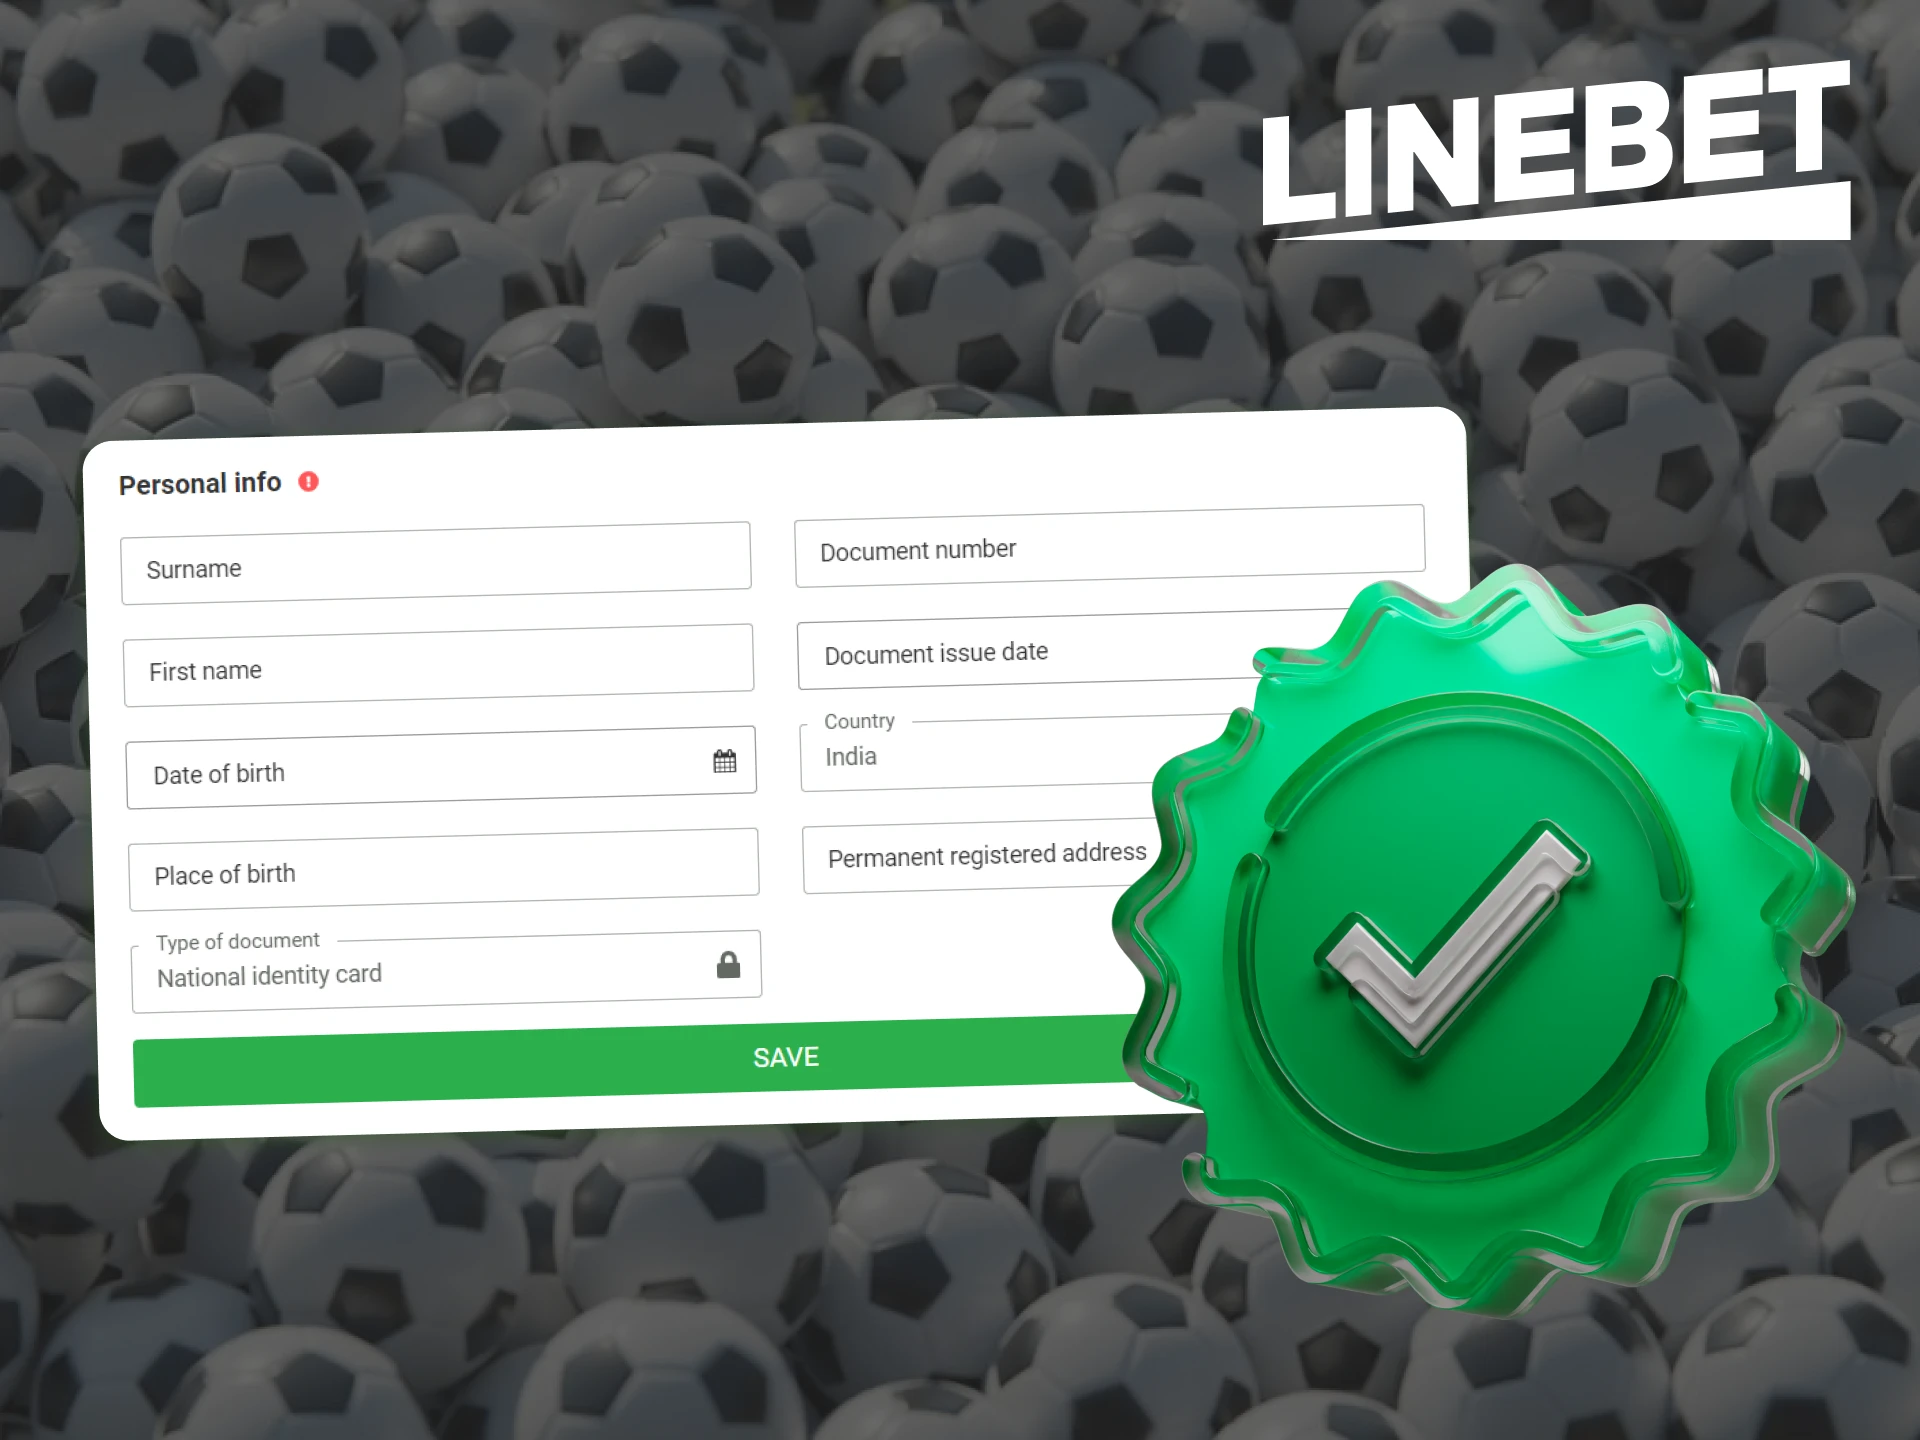 Each Linebet user needs to verify their profile.